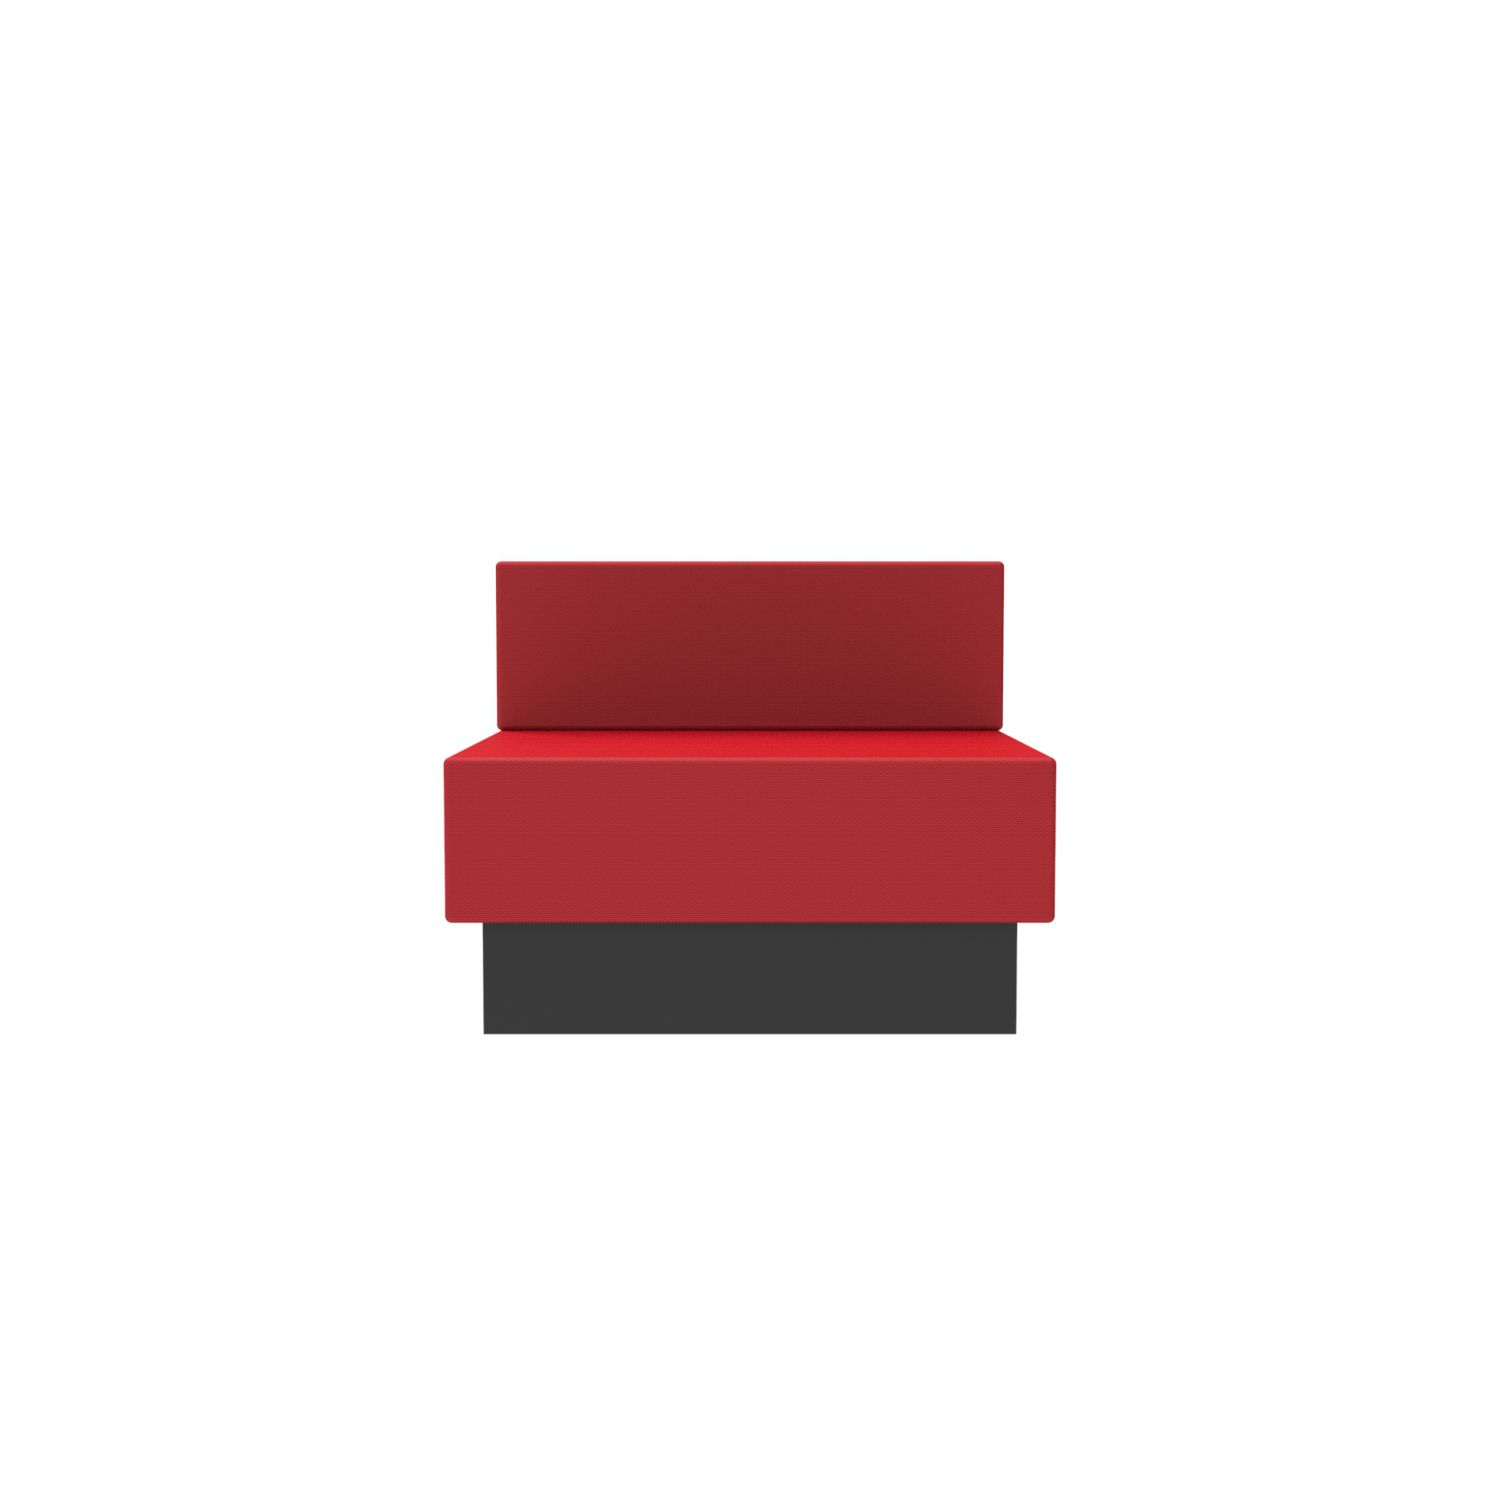 lensvelt oma blocks lounging edition closed base with backrest full length 90 cm width grenada red 010 black ral9005 hard leg ends